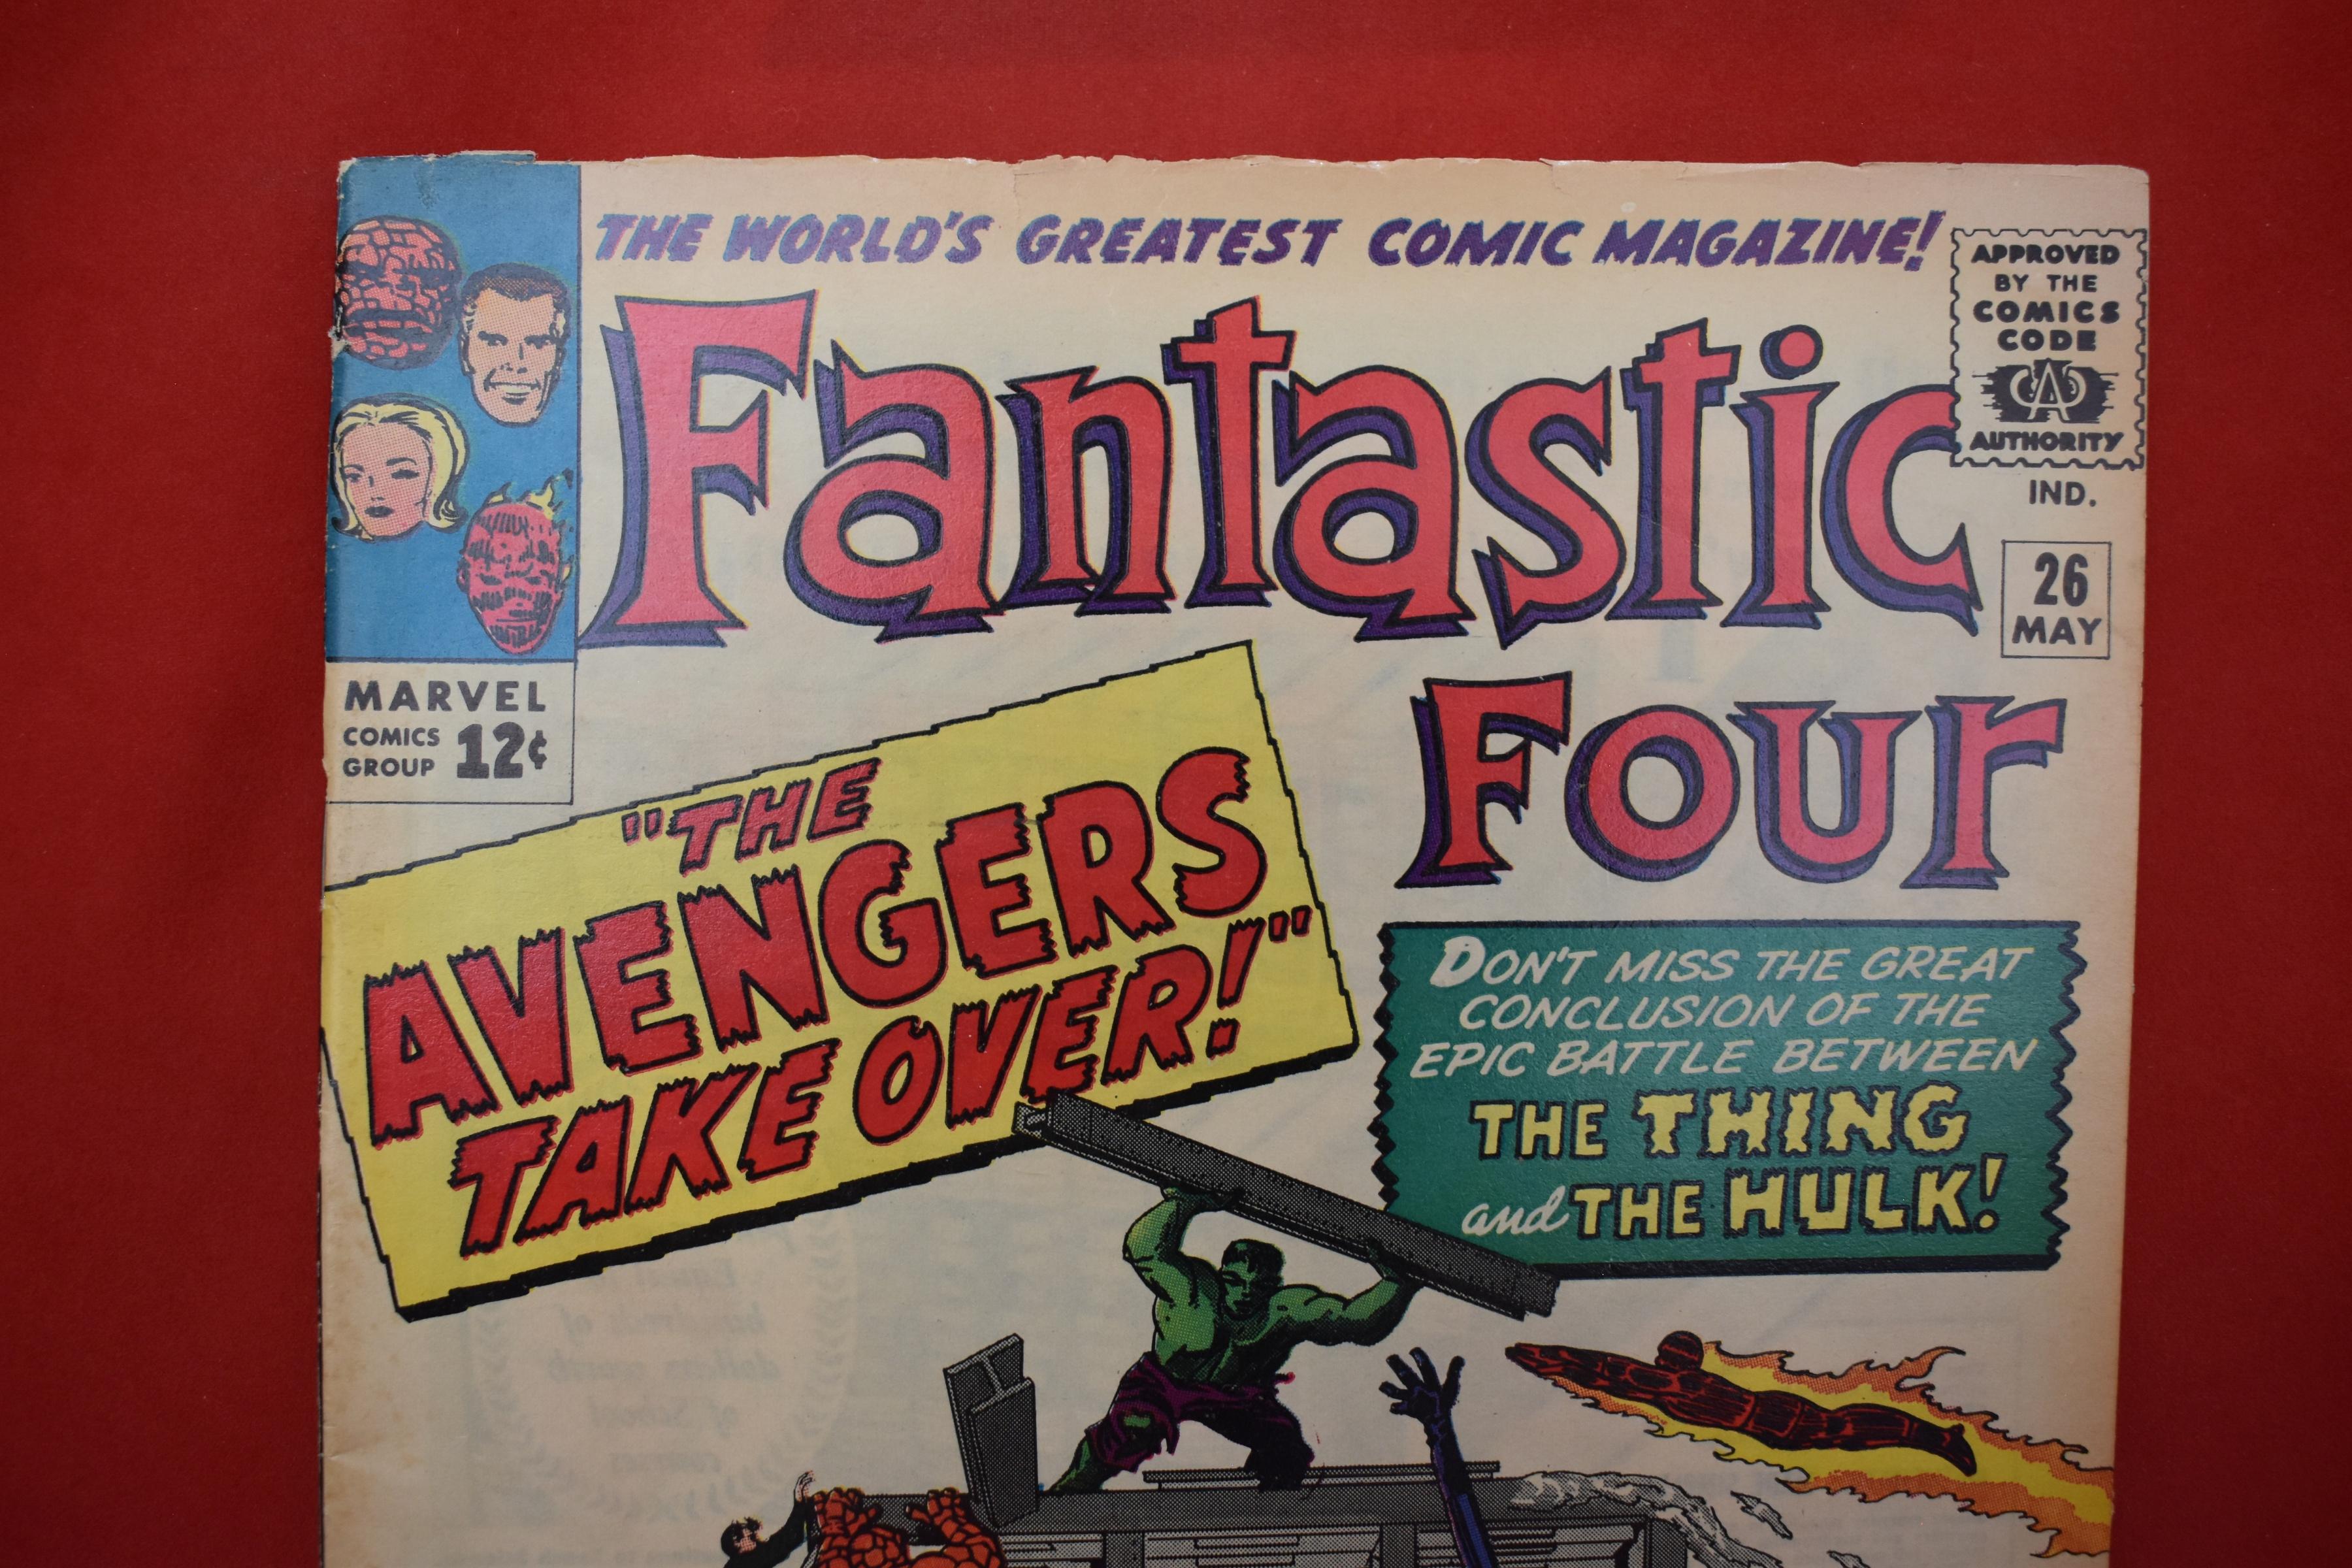 FANTASTIC FOUR #26 | KEY CLASSIC BATTLE AVENGERS & FANTASTIC FOUR VS THE HULK! | NICE 1964 BOOK!